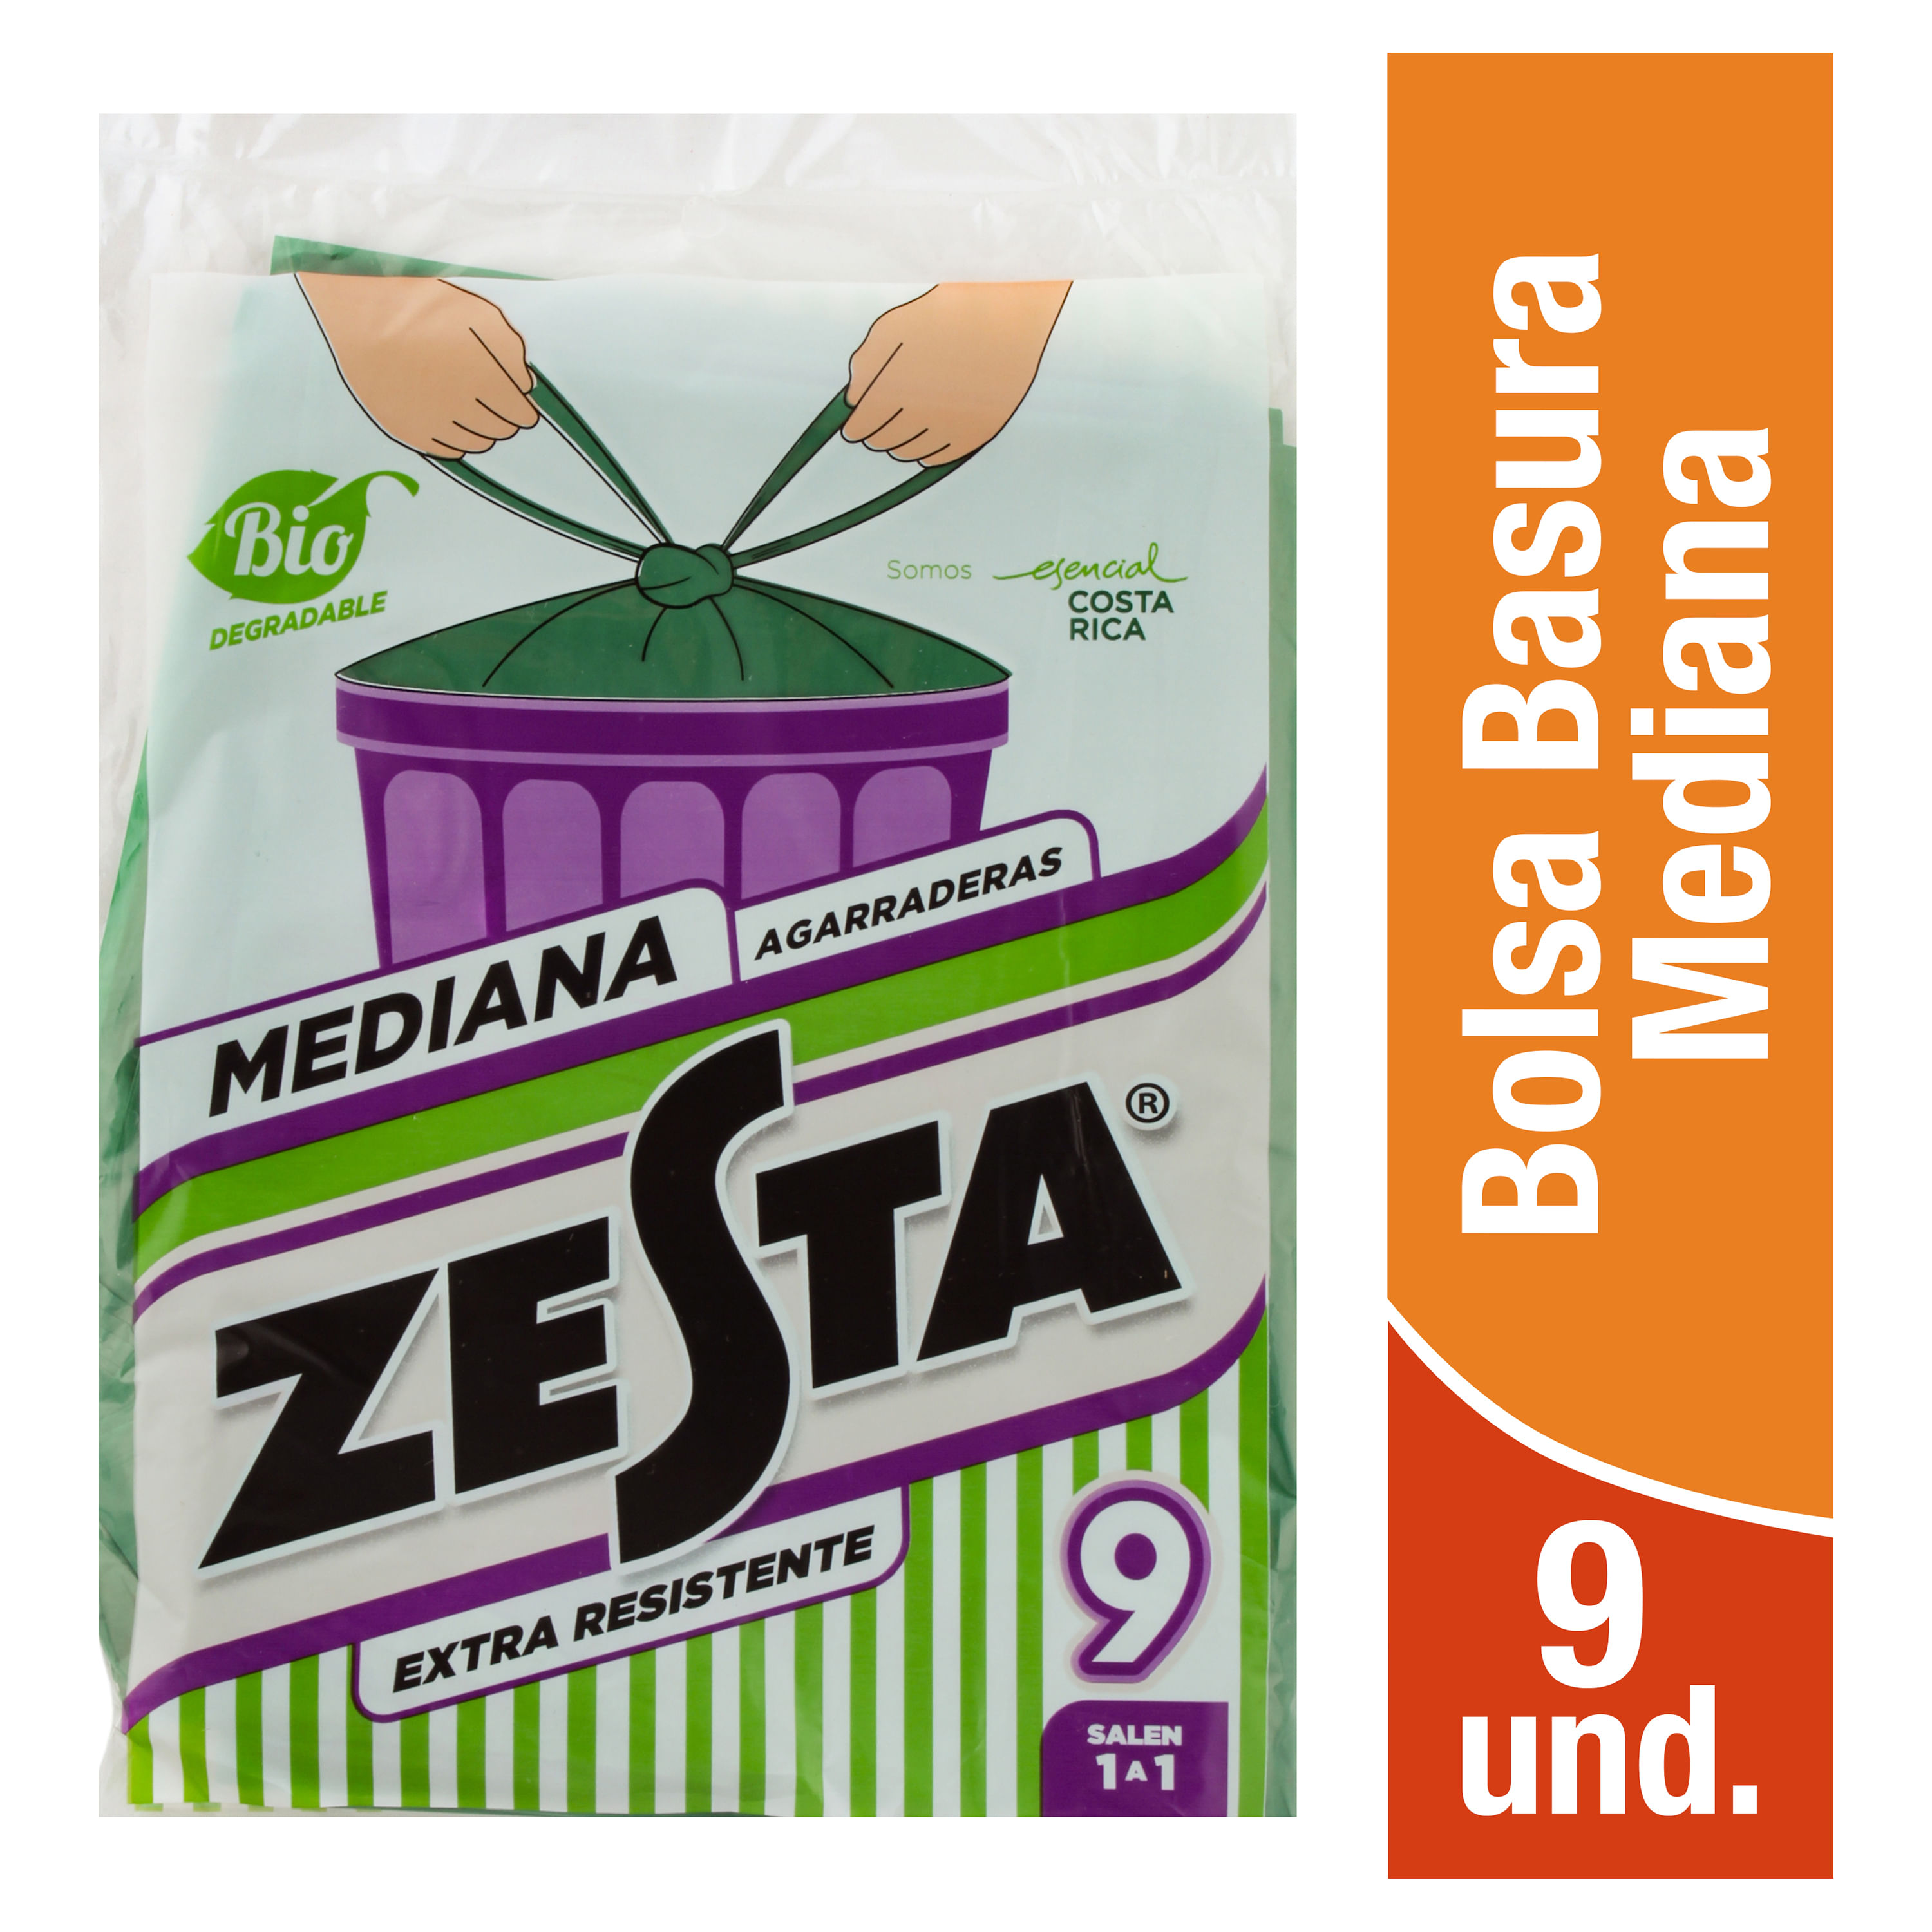 Bolsa-Zesta-Mediana-Bio-Paquete-9-Unidades-1-24738